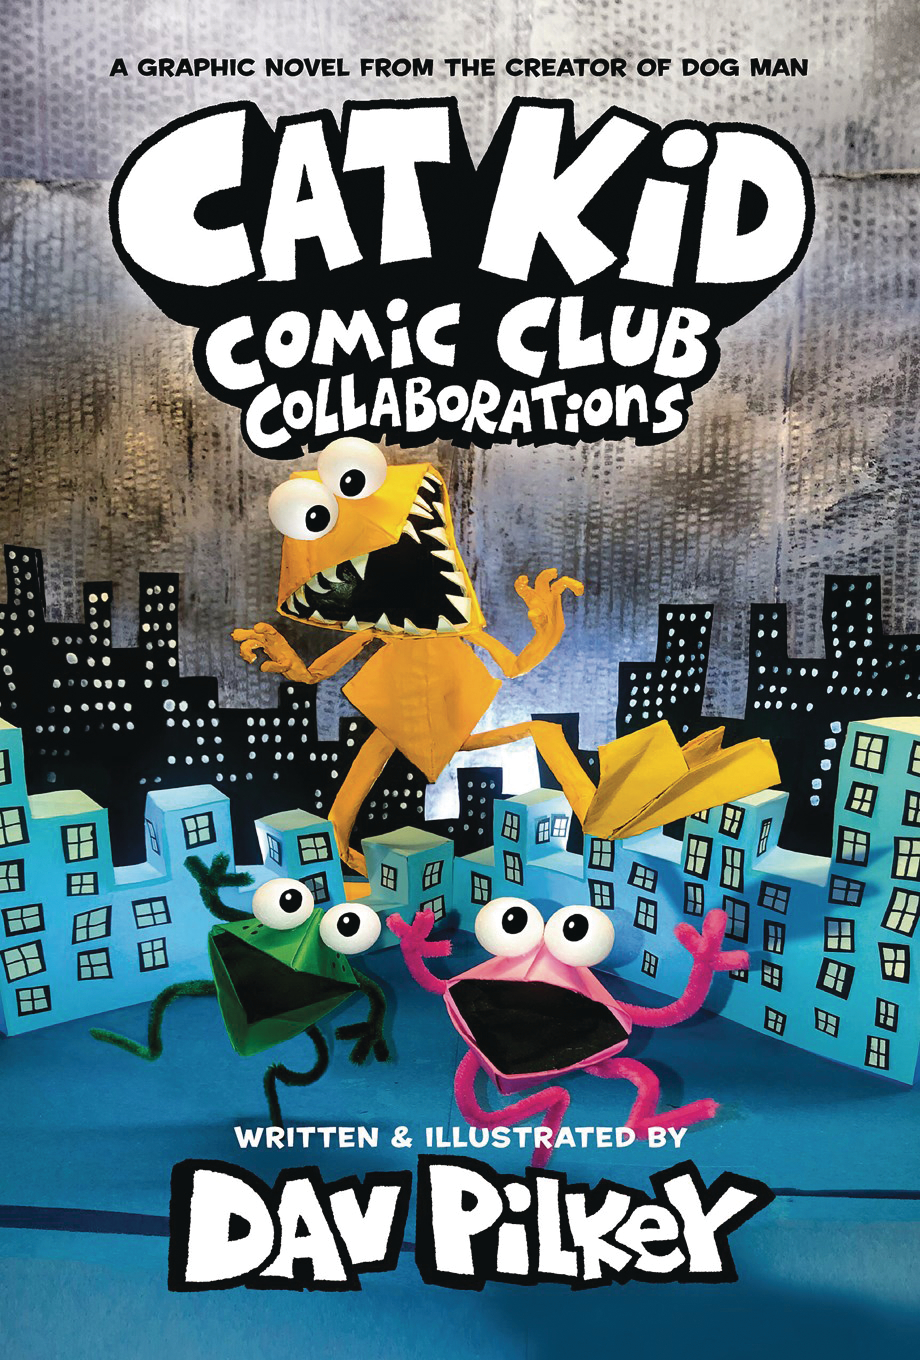 Cat Kid Comic Club Hardcover Graphic Novel Volume 4 Collaborations